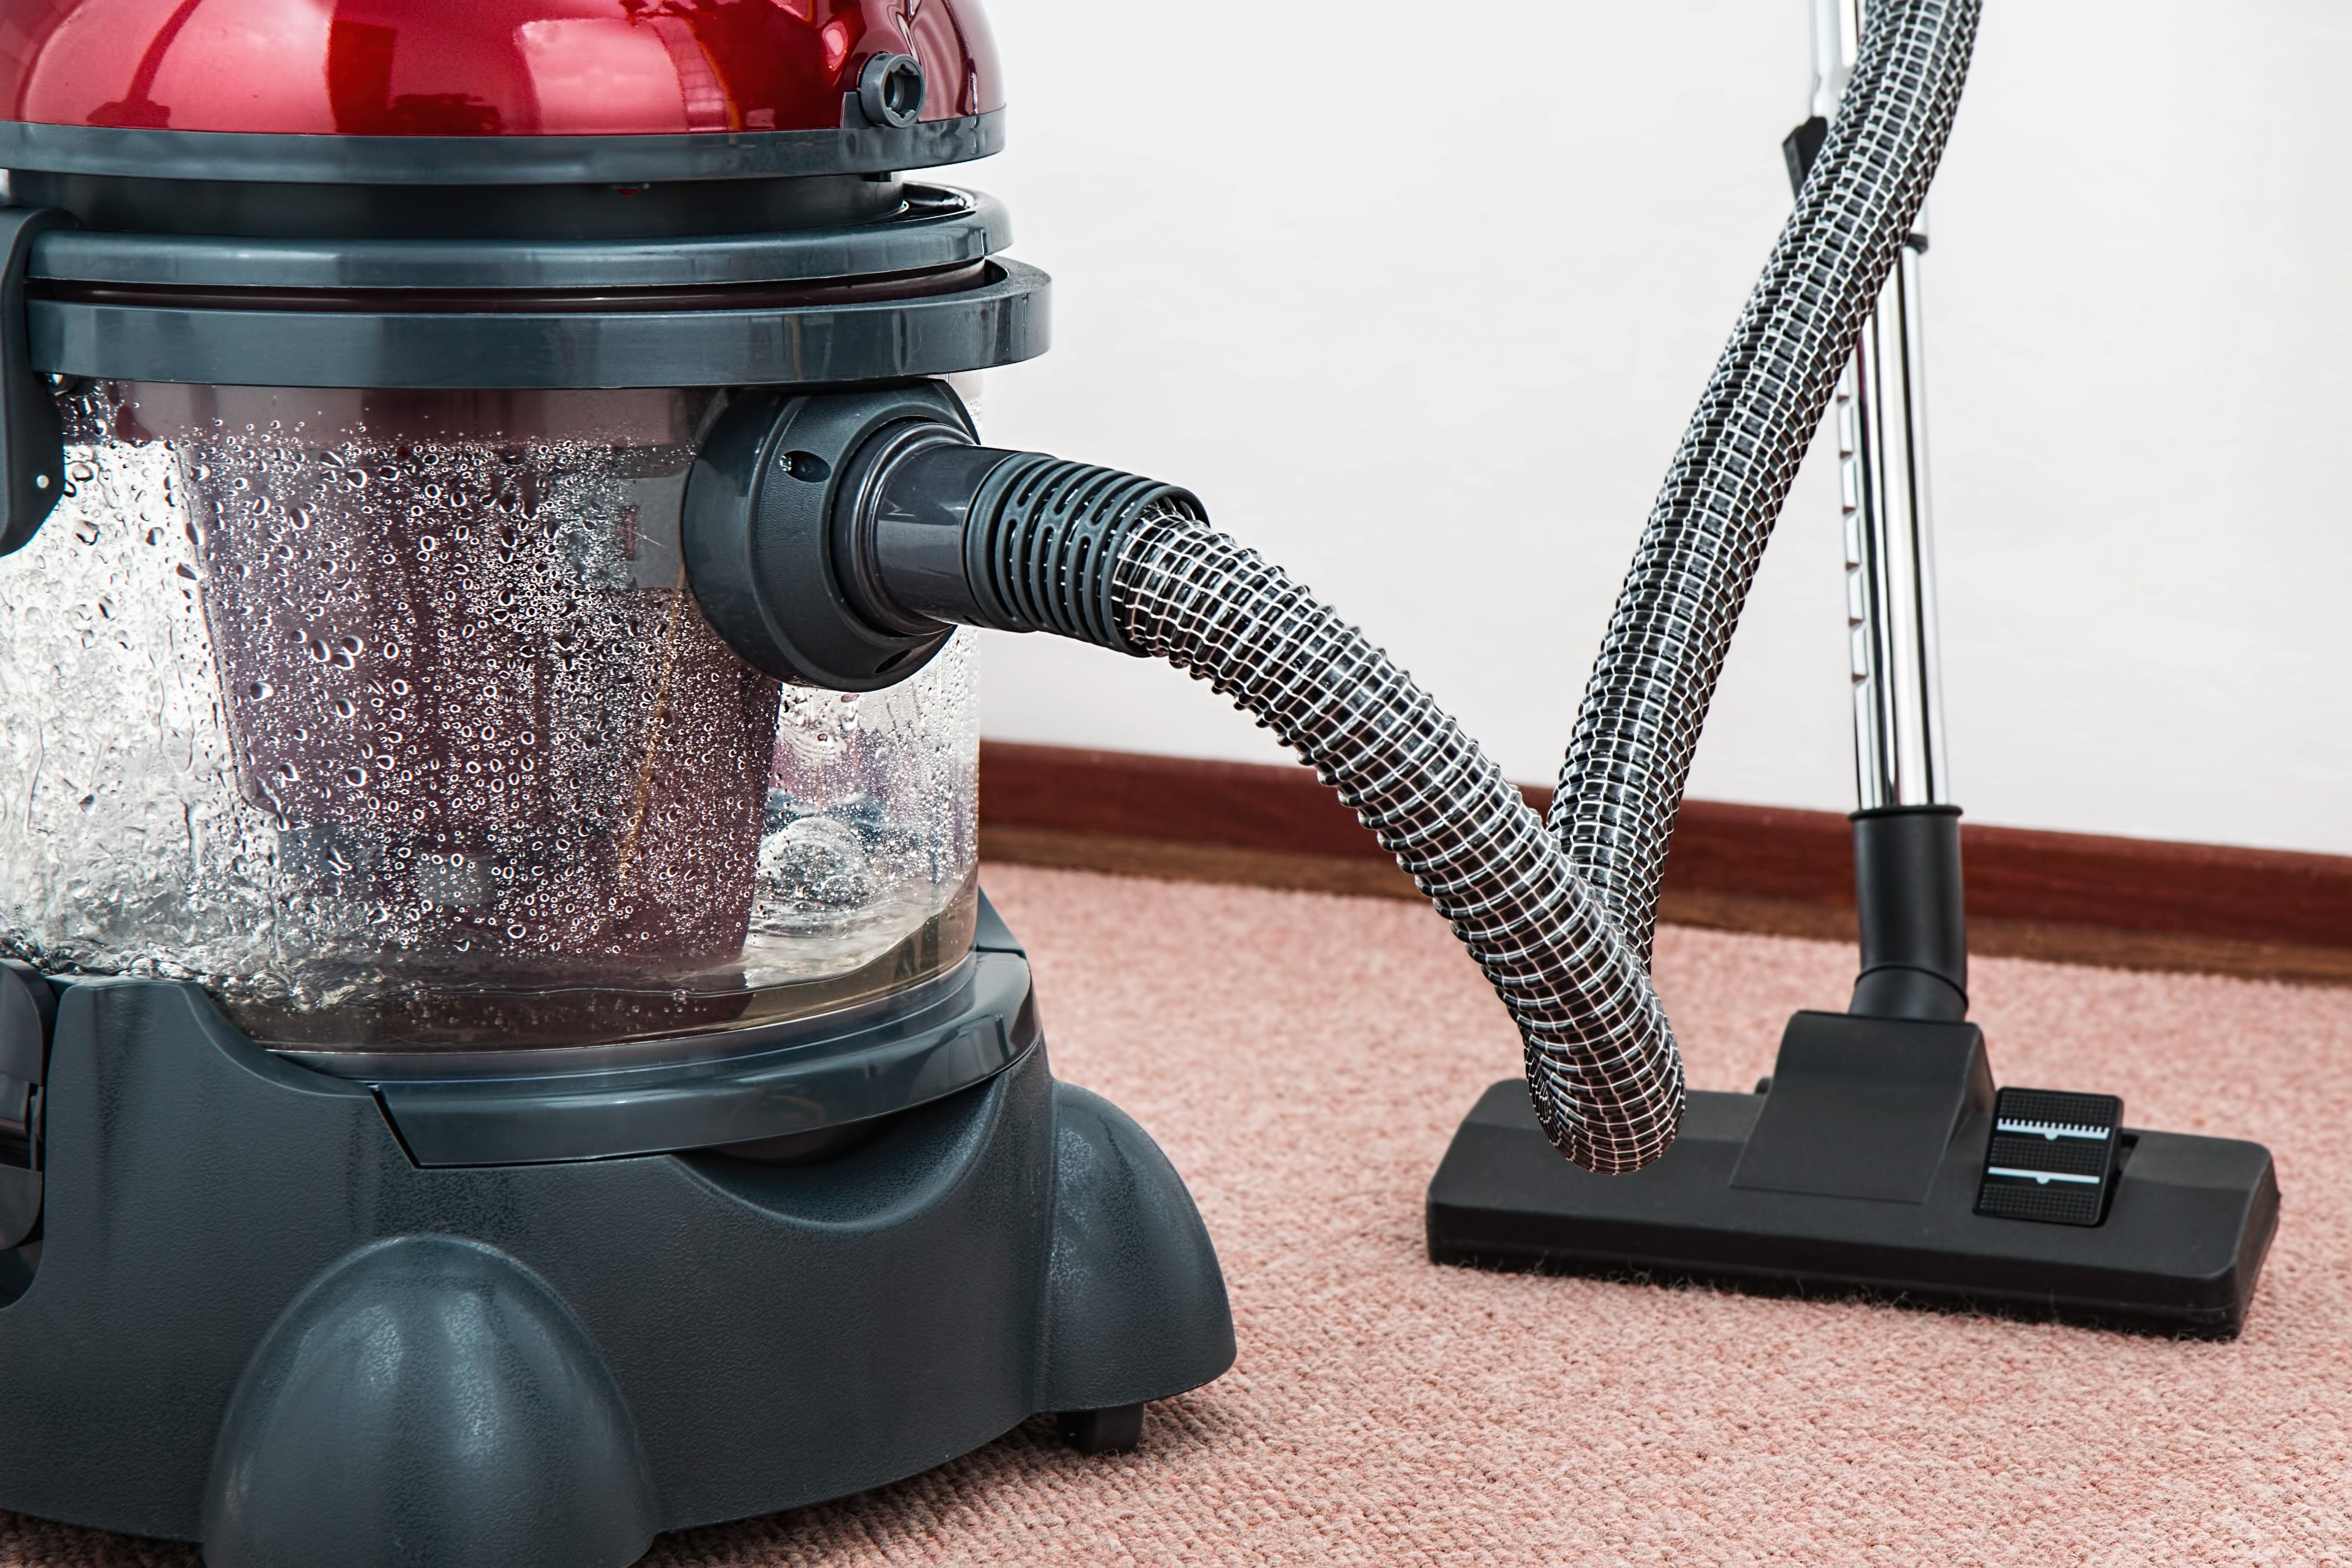 Vacuum cleaner | Source: Pexels